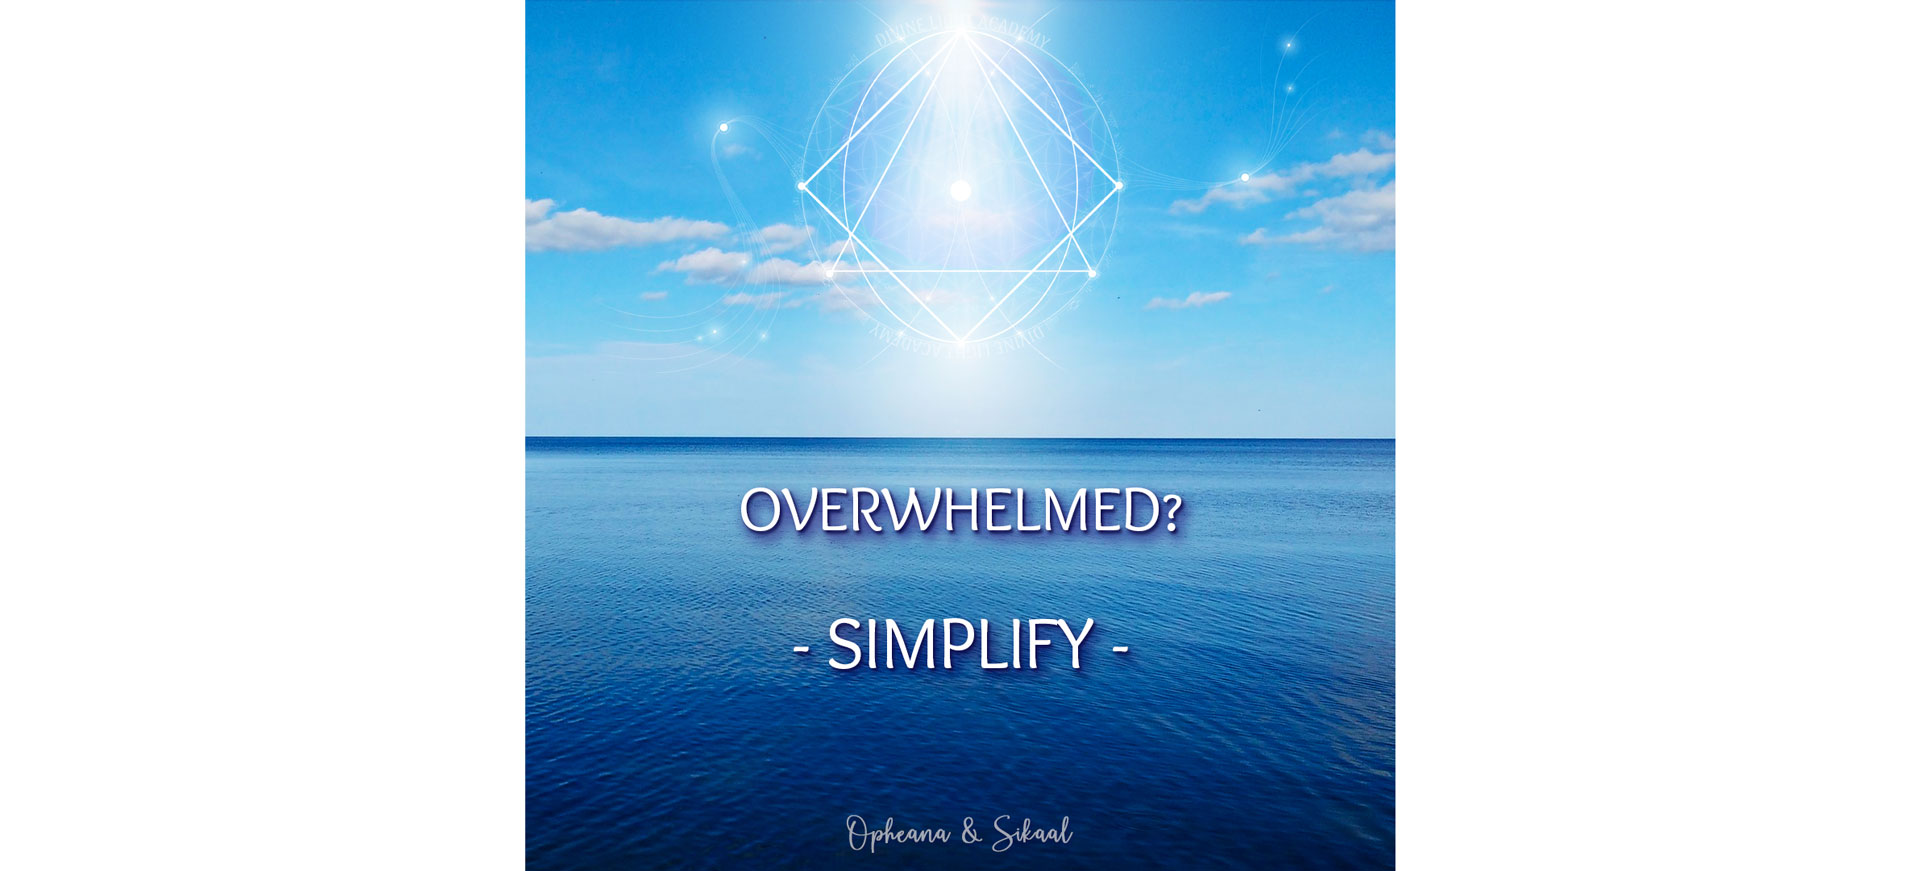 Overwhelmed? Simplify